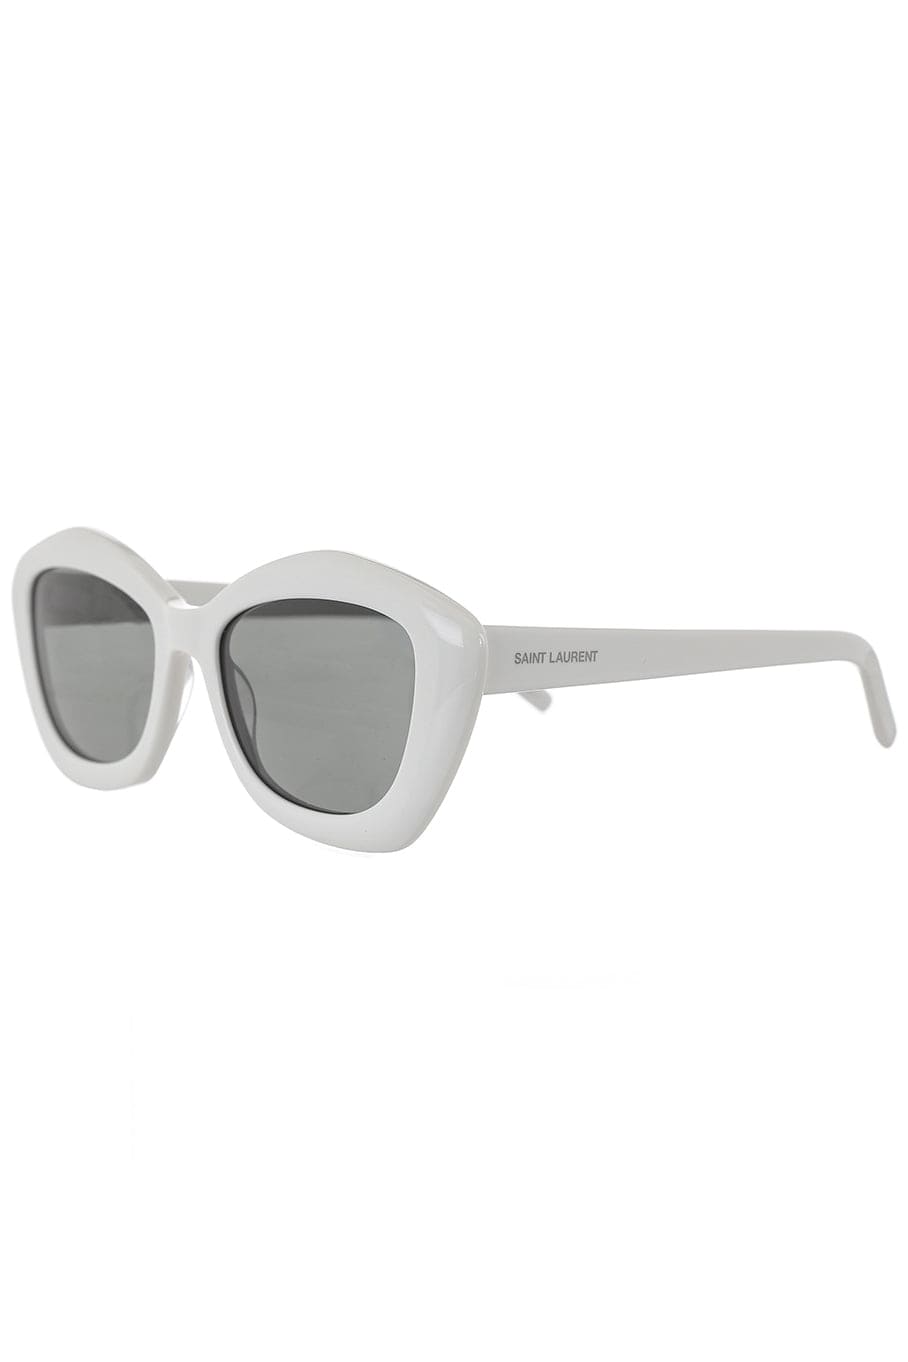 SAINT LAURENT-Acetate Sunglasses - Ivory Grey-IVORY/GREY